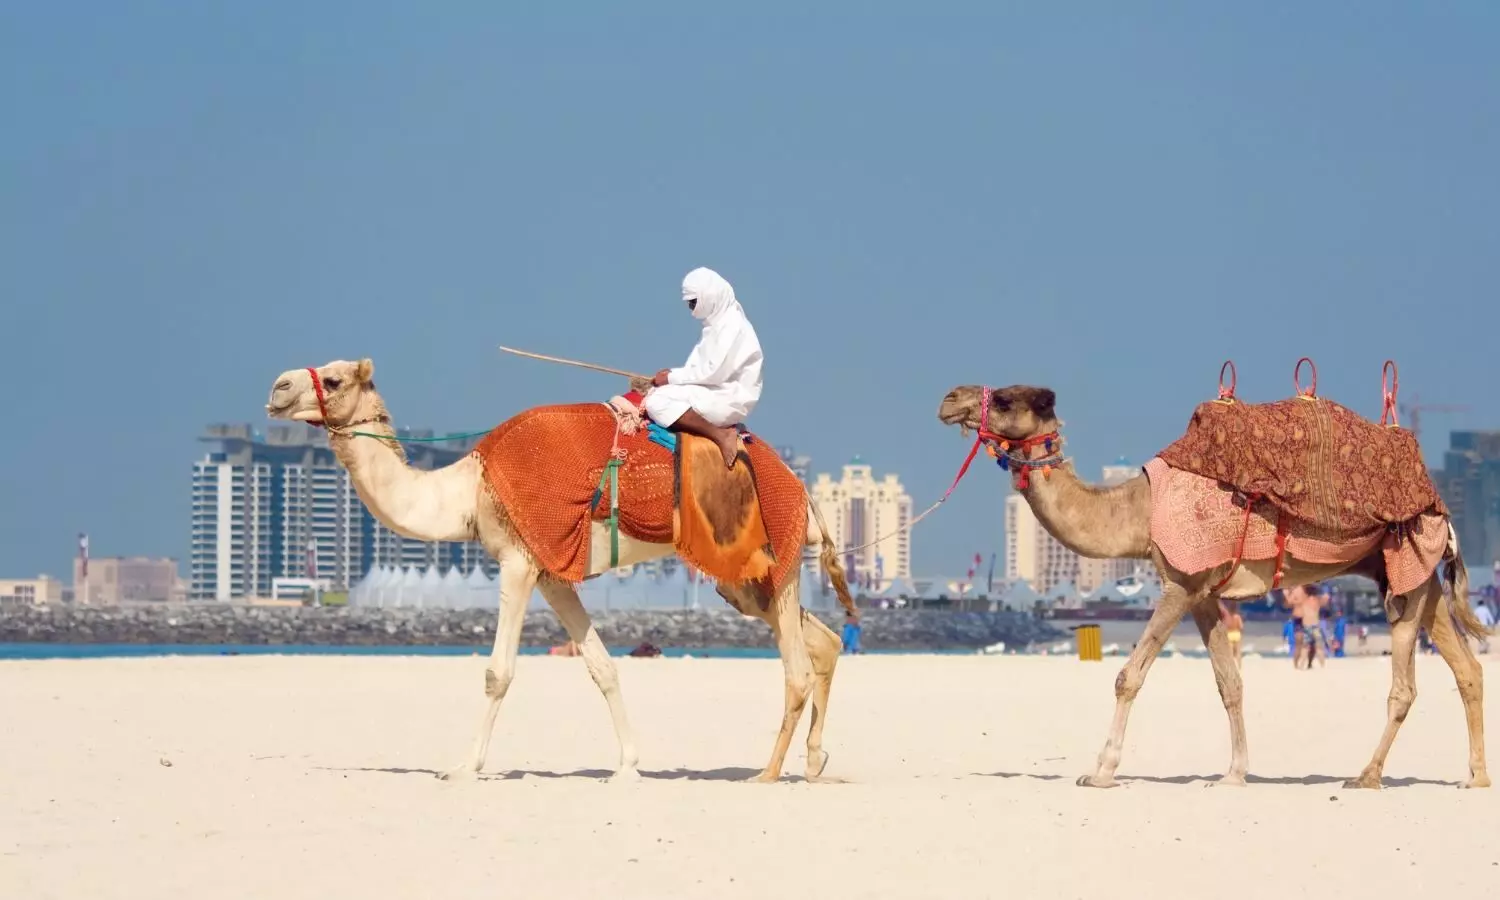 A man rides a camel through the Gulf desert.